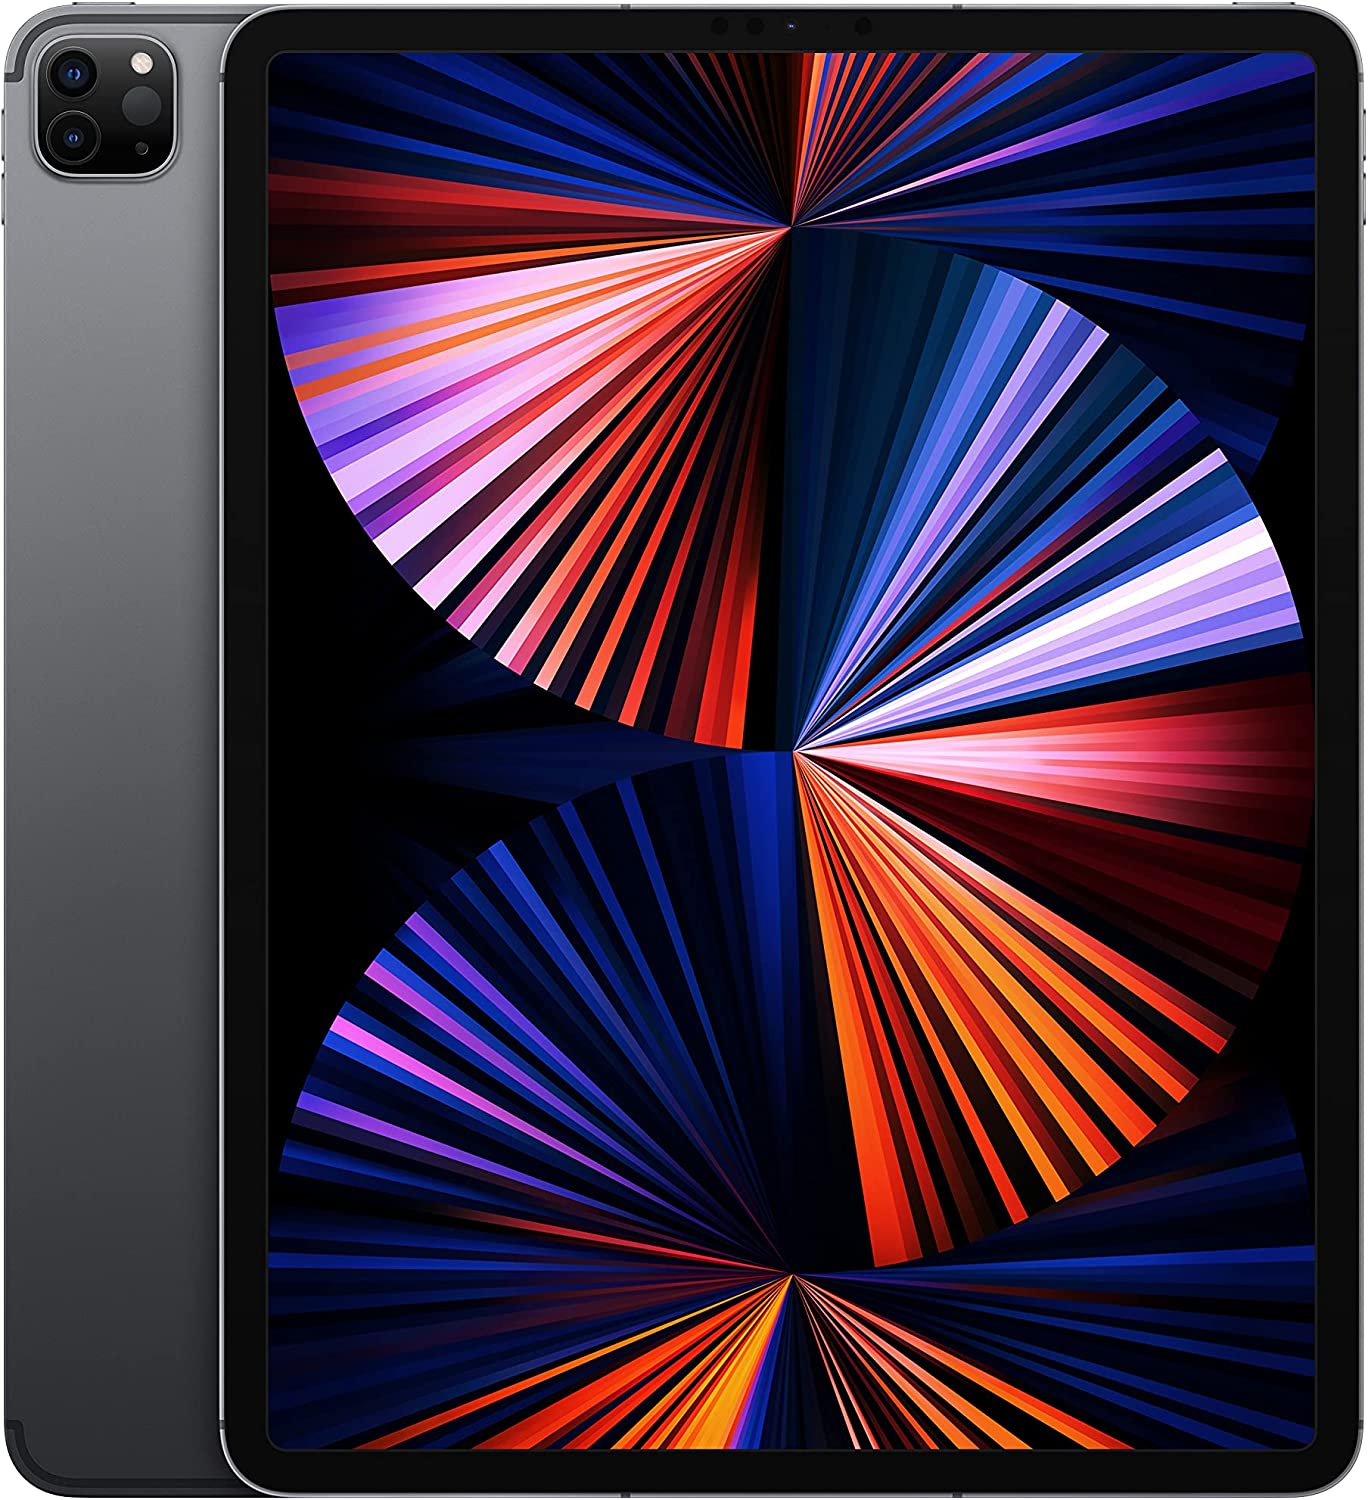 Apple iPad Pro 5th Gen 2021, 12.9-inch, 256GB, WIFI + Cellular - Space Gray (Refurbished)